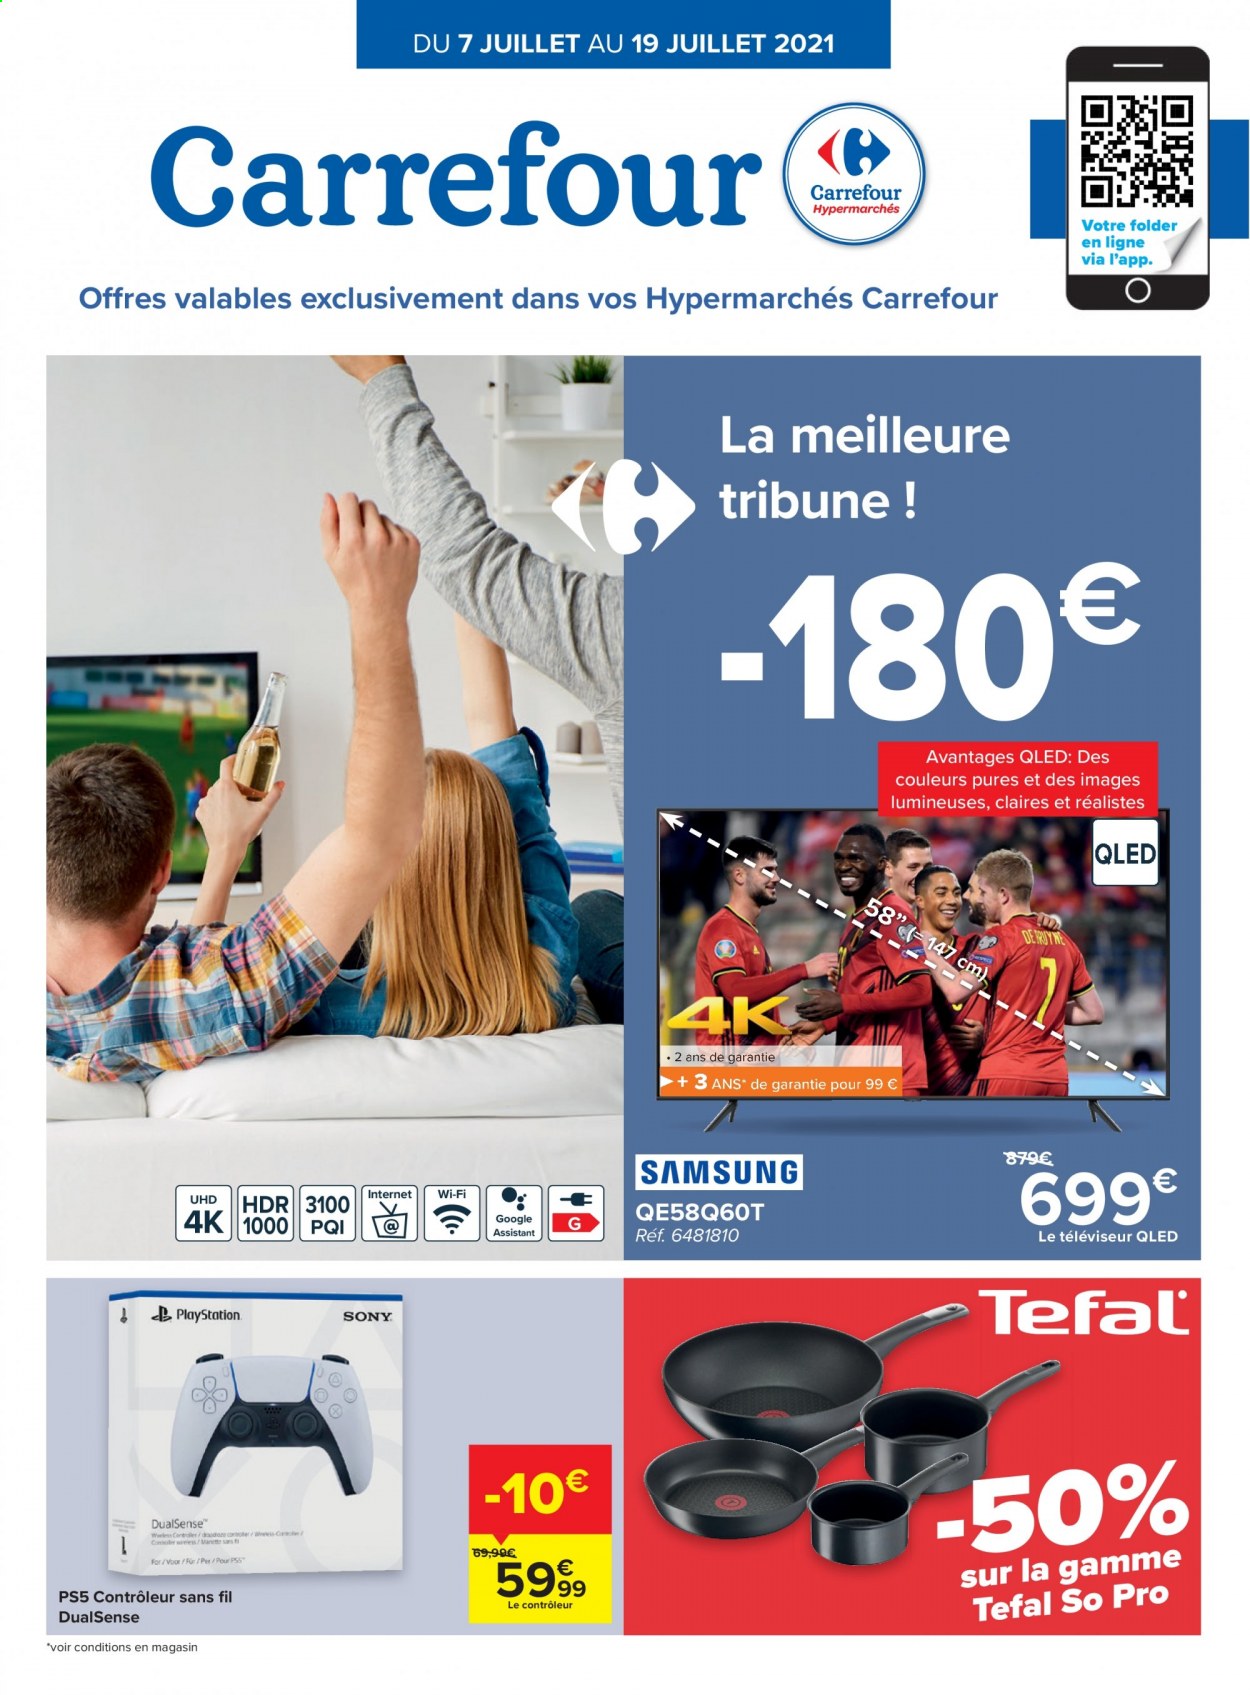 thumbnail - Carrefour hypermarkt-aanbieding - 07/07/2021 - 19/07/2021 -  producten in de aanbieding - PlayStation, Samsung, Sony, Tefal, PlayStation 5. Pagina 1.